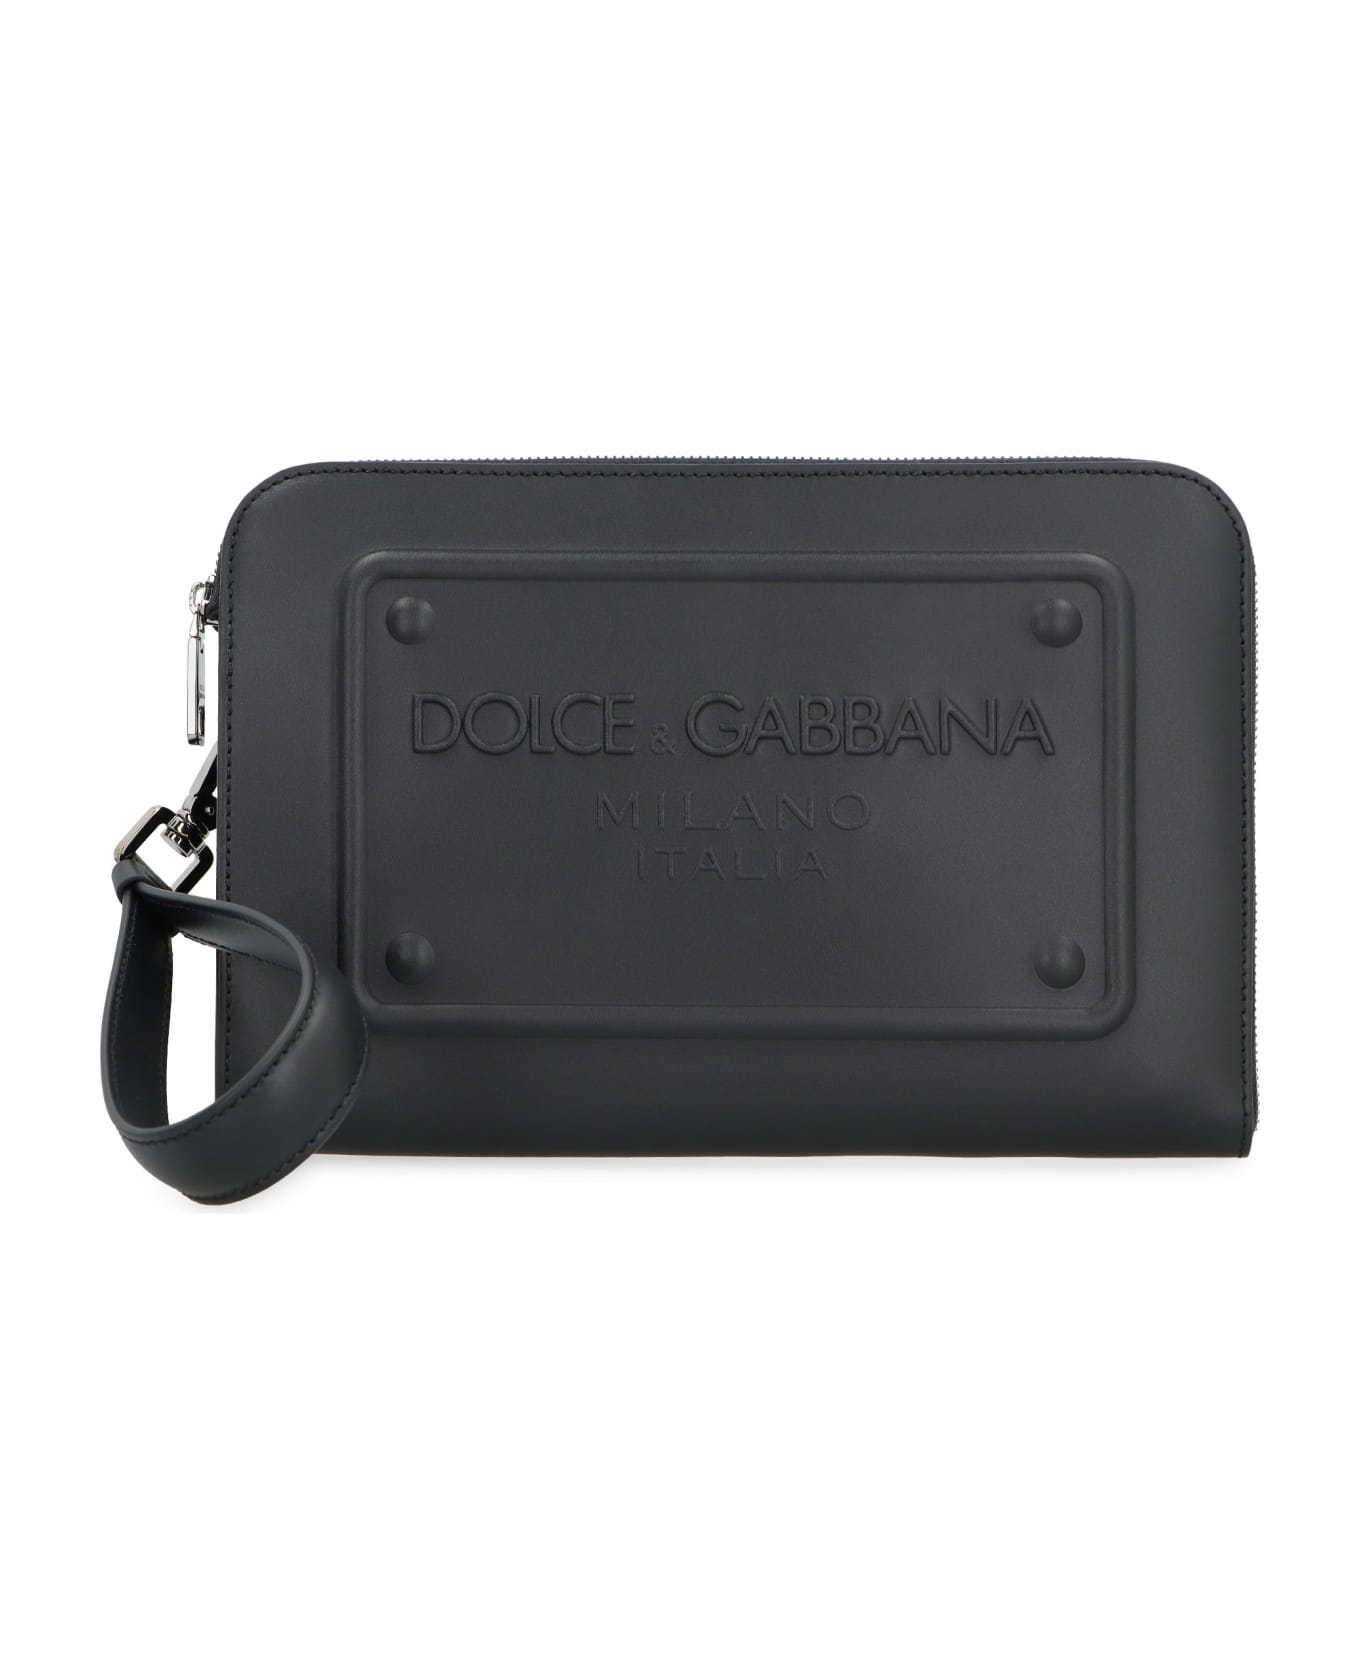 Dolce & Gabbana Leather Clutch - black